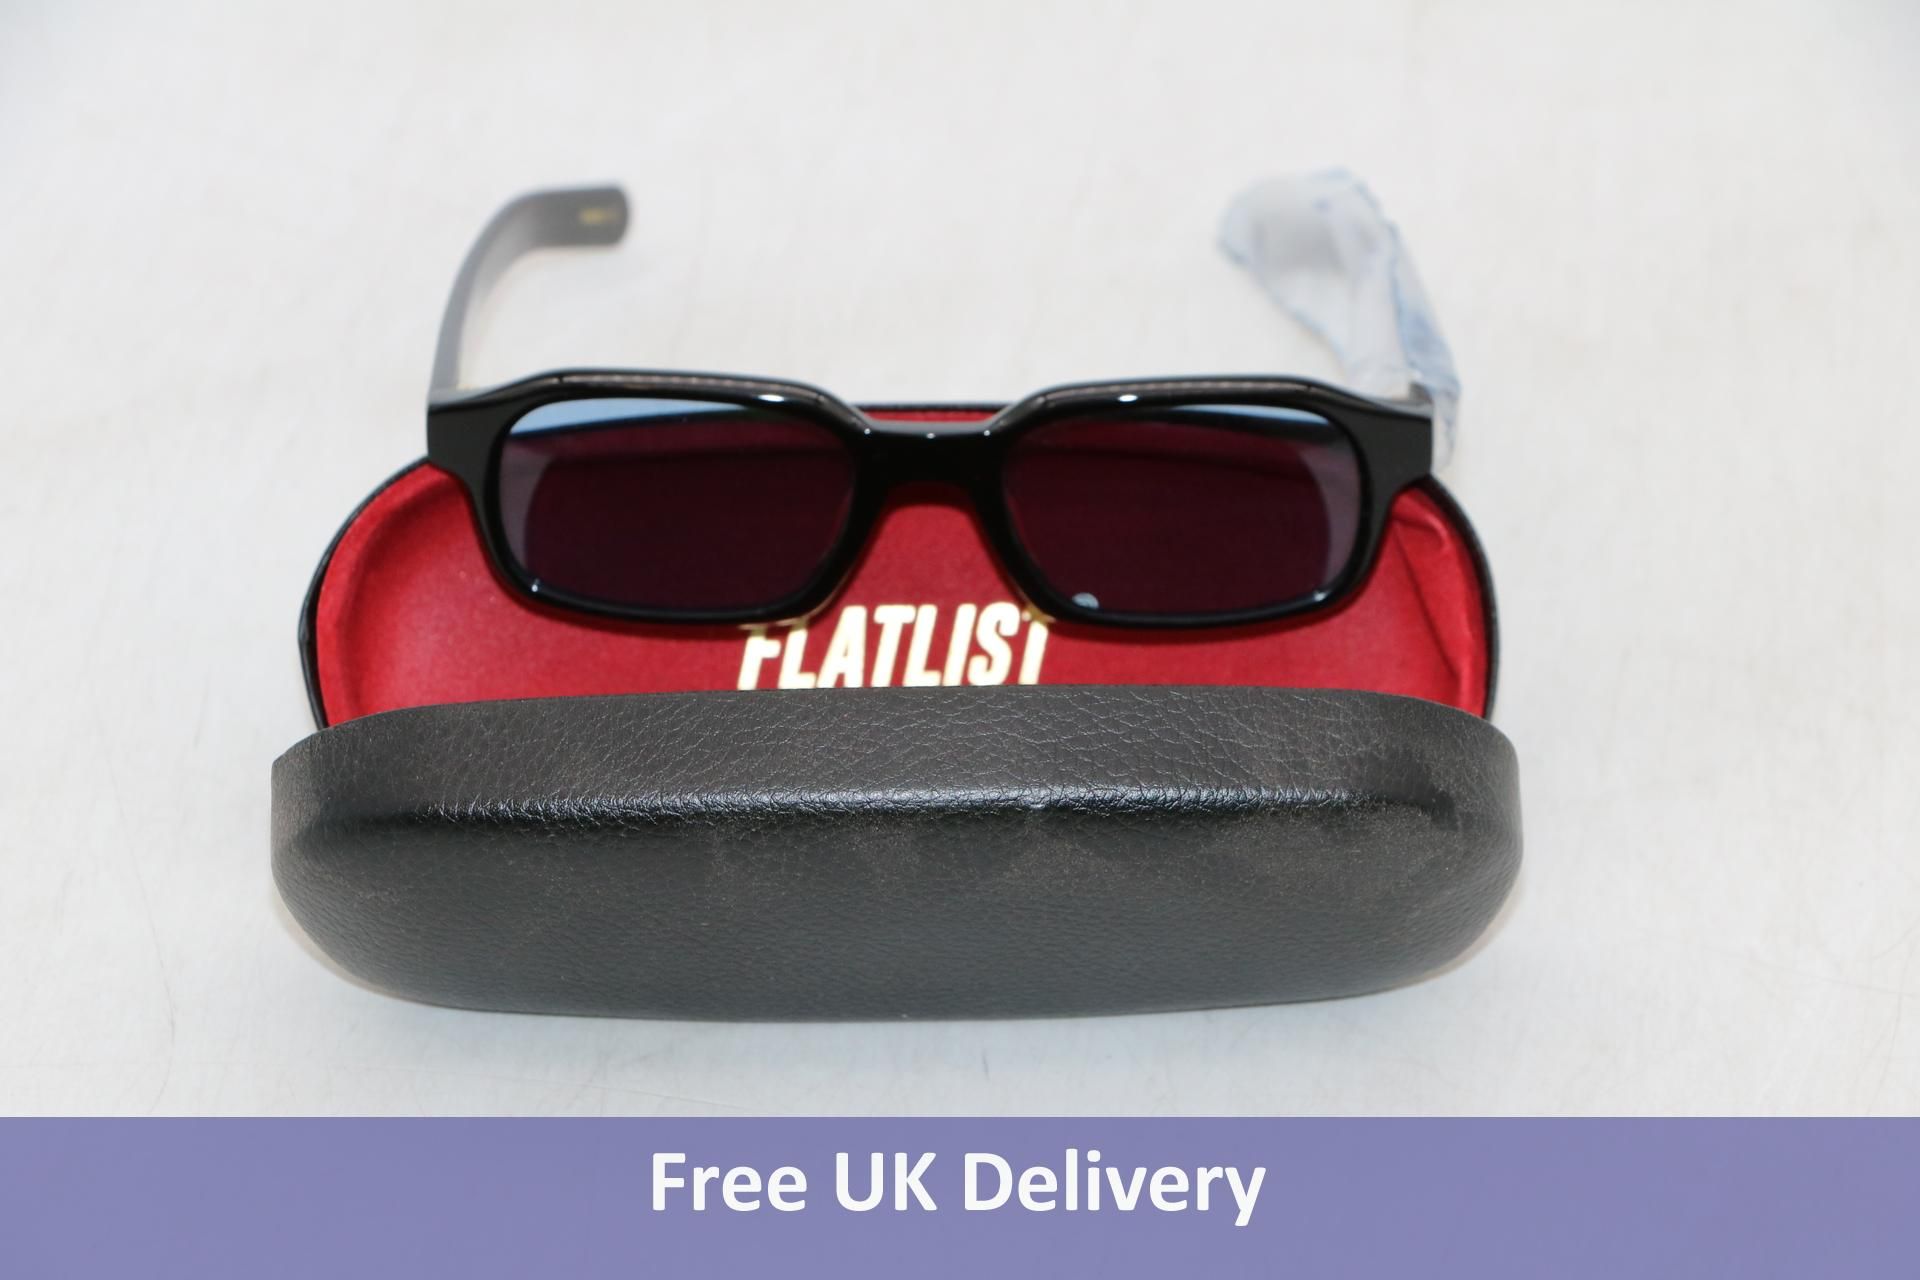 Flatlist Hanky Sunglasses, Solid Black/Solid Blue Lens 005 180, Box and Case Damaged